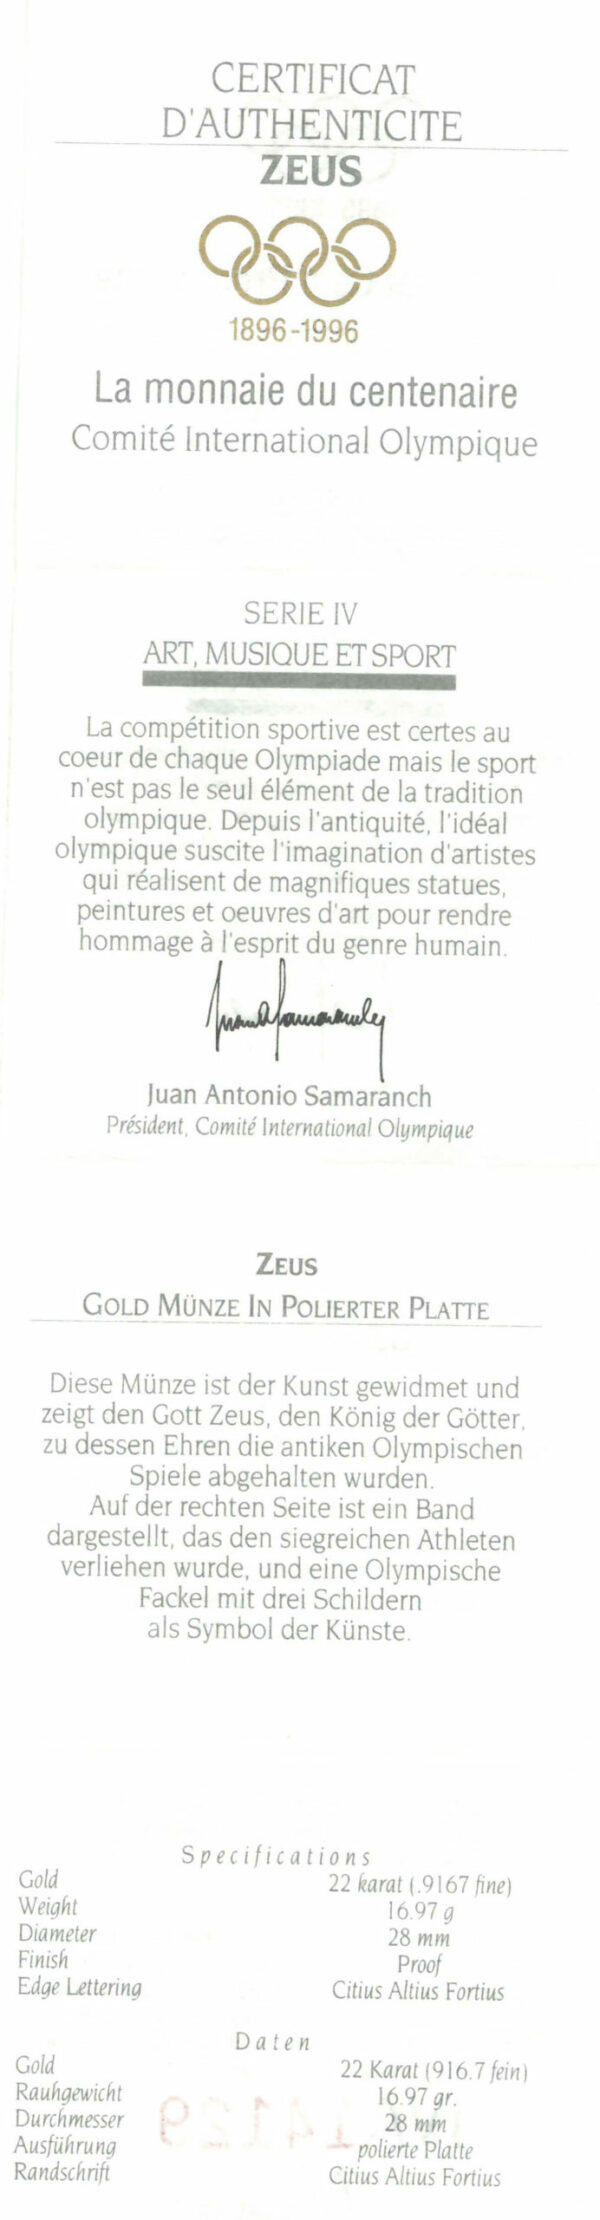 Certificate of authenticity &quot;Zeus